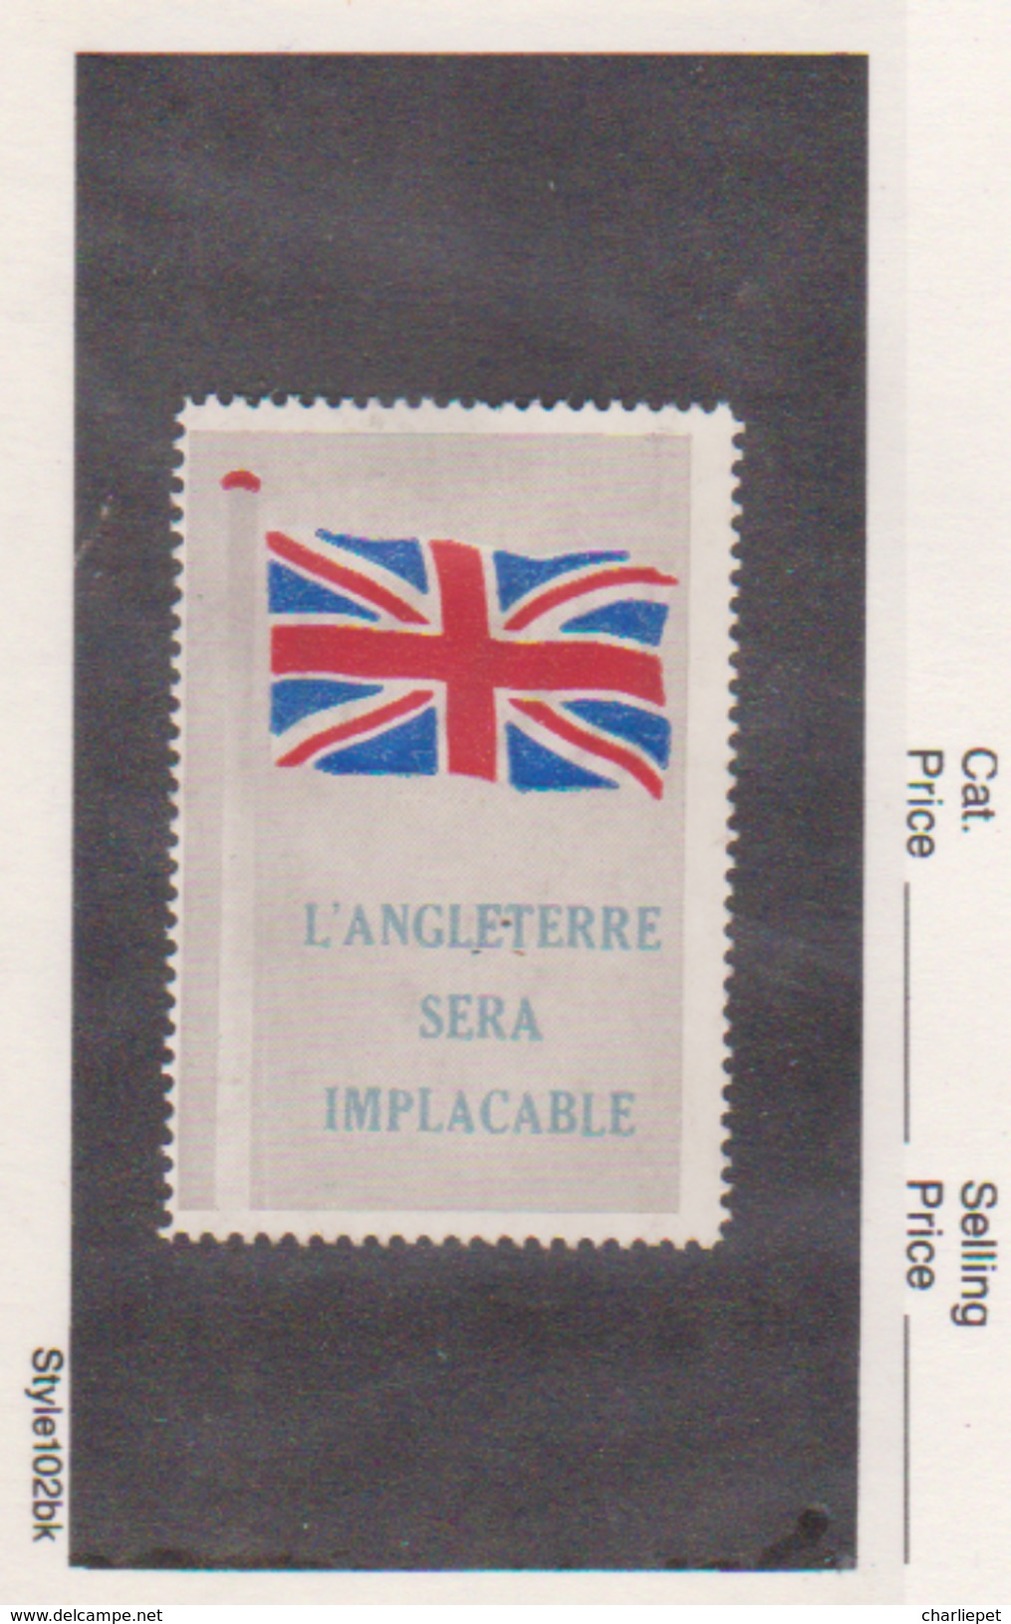 France WWI  British Flags  L'angleterre Sera Implacable Vignette  Military Heritage Poster Stamp - Vignette Militari